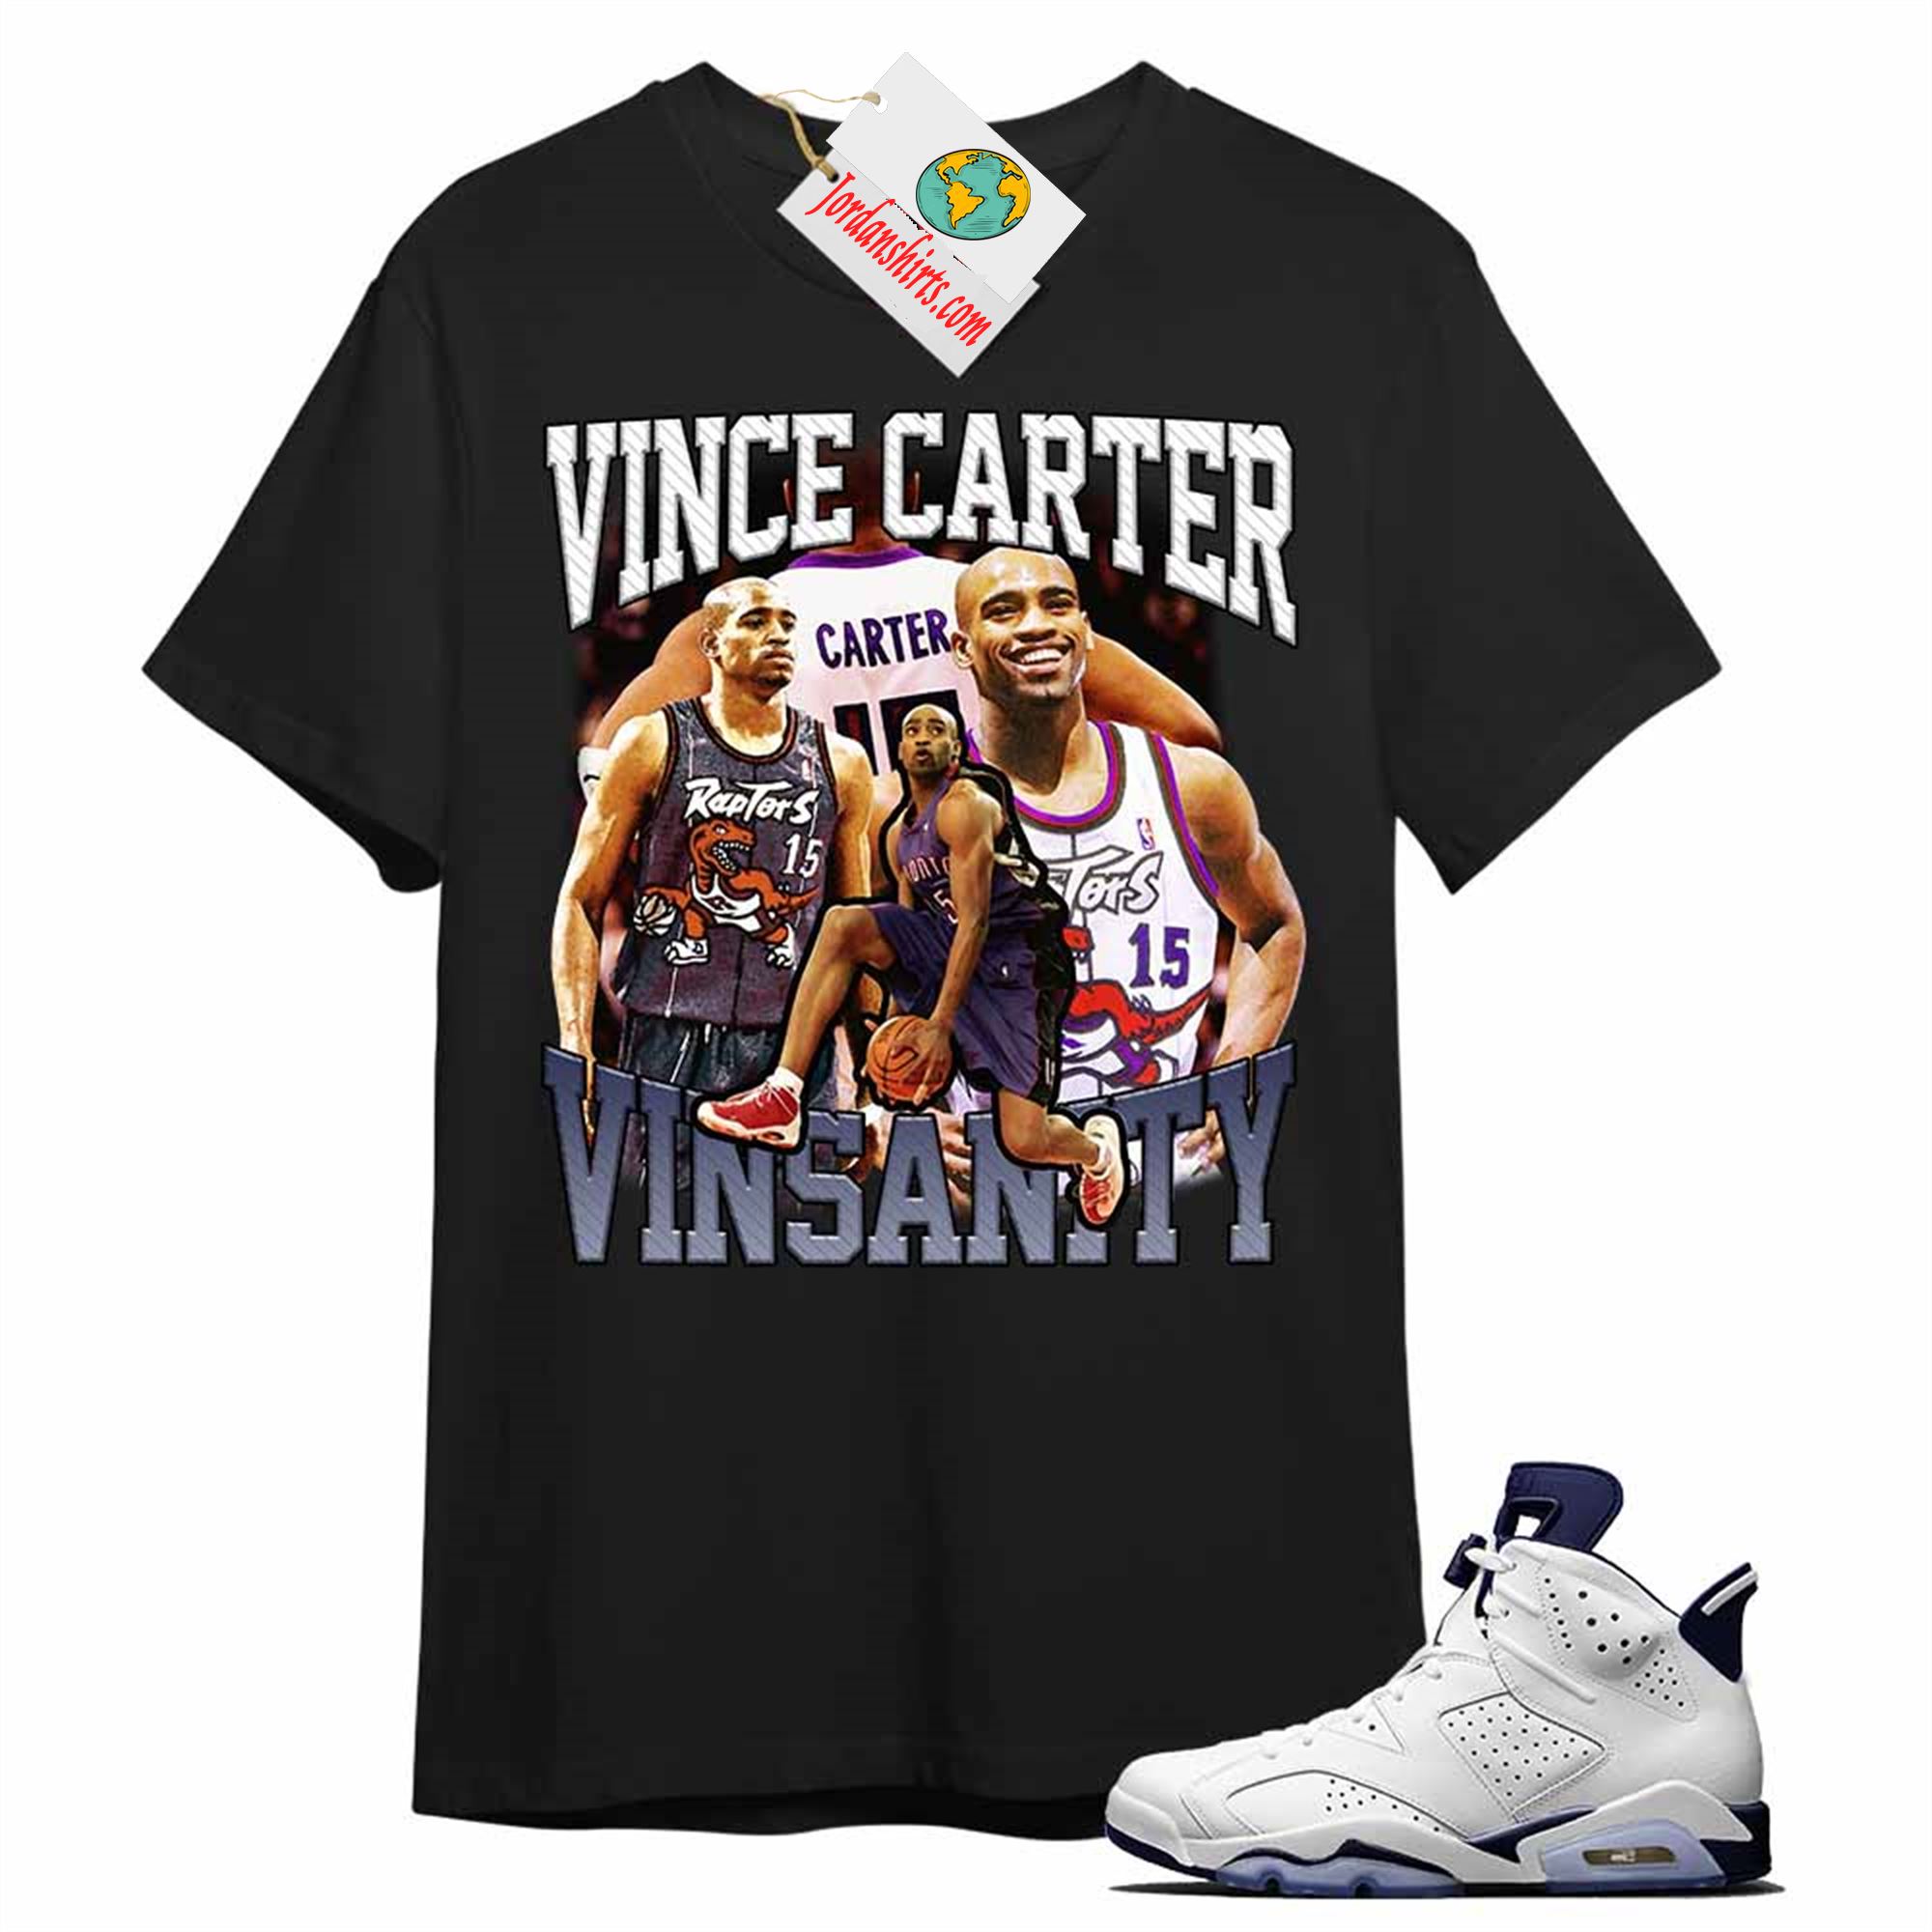 Jordan 6 Shirt, Vince Carter Vinsanity Basketball 90s Retro Vintage Black Air Jordan 6 Midnight Navy 6s Full Size Up To 5xl